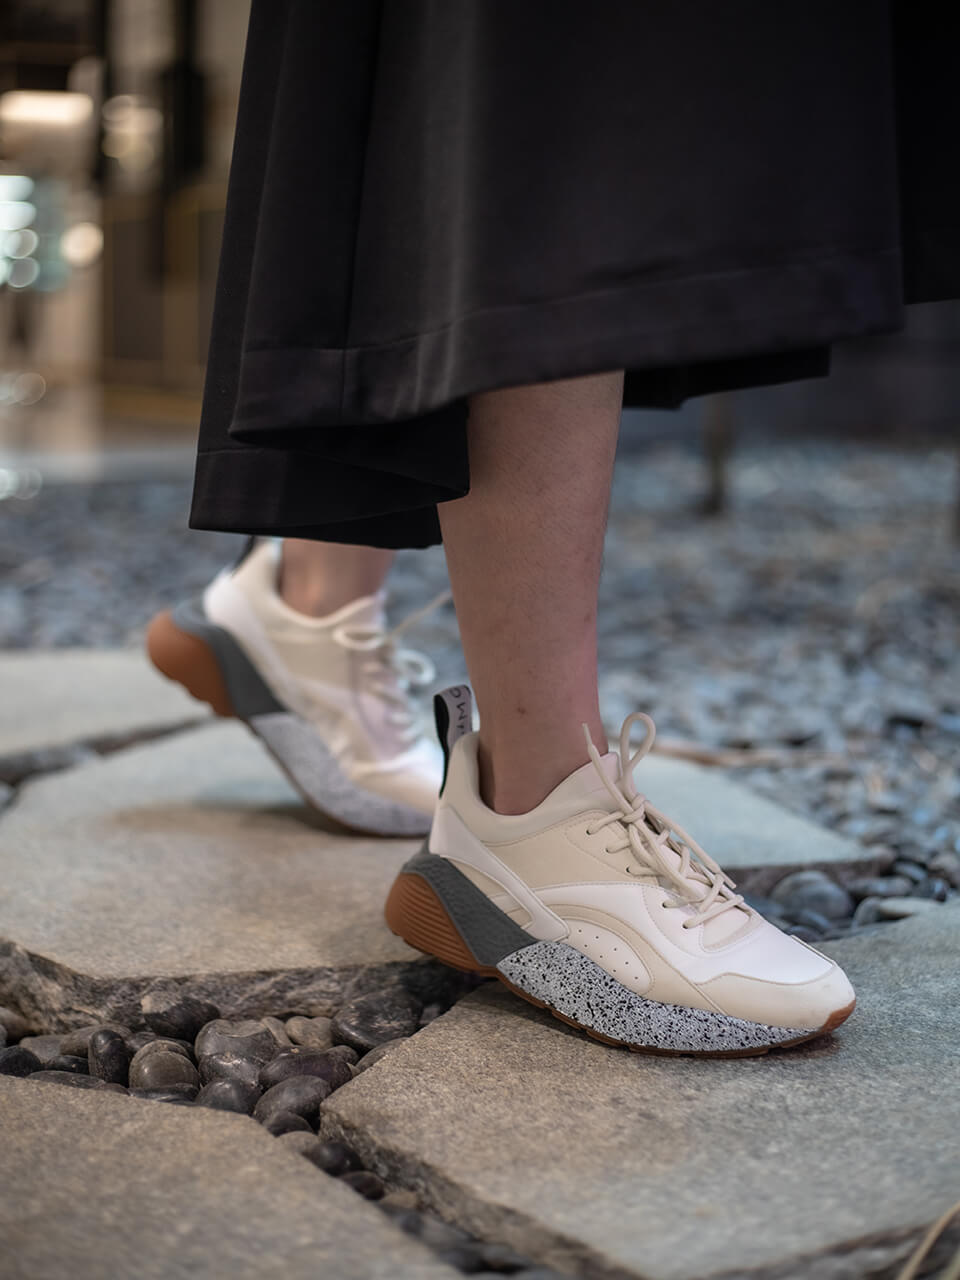 Stella McCartney Eclypse Sneakers (White) from DFS’ Fashion Avenue